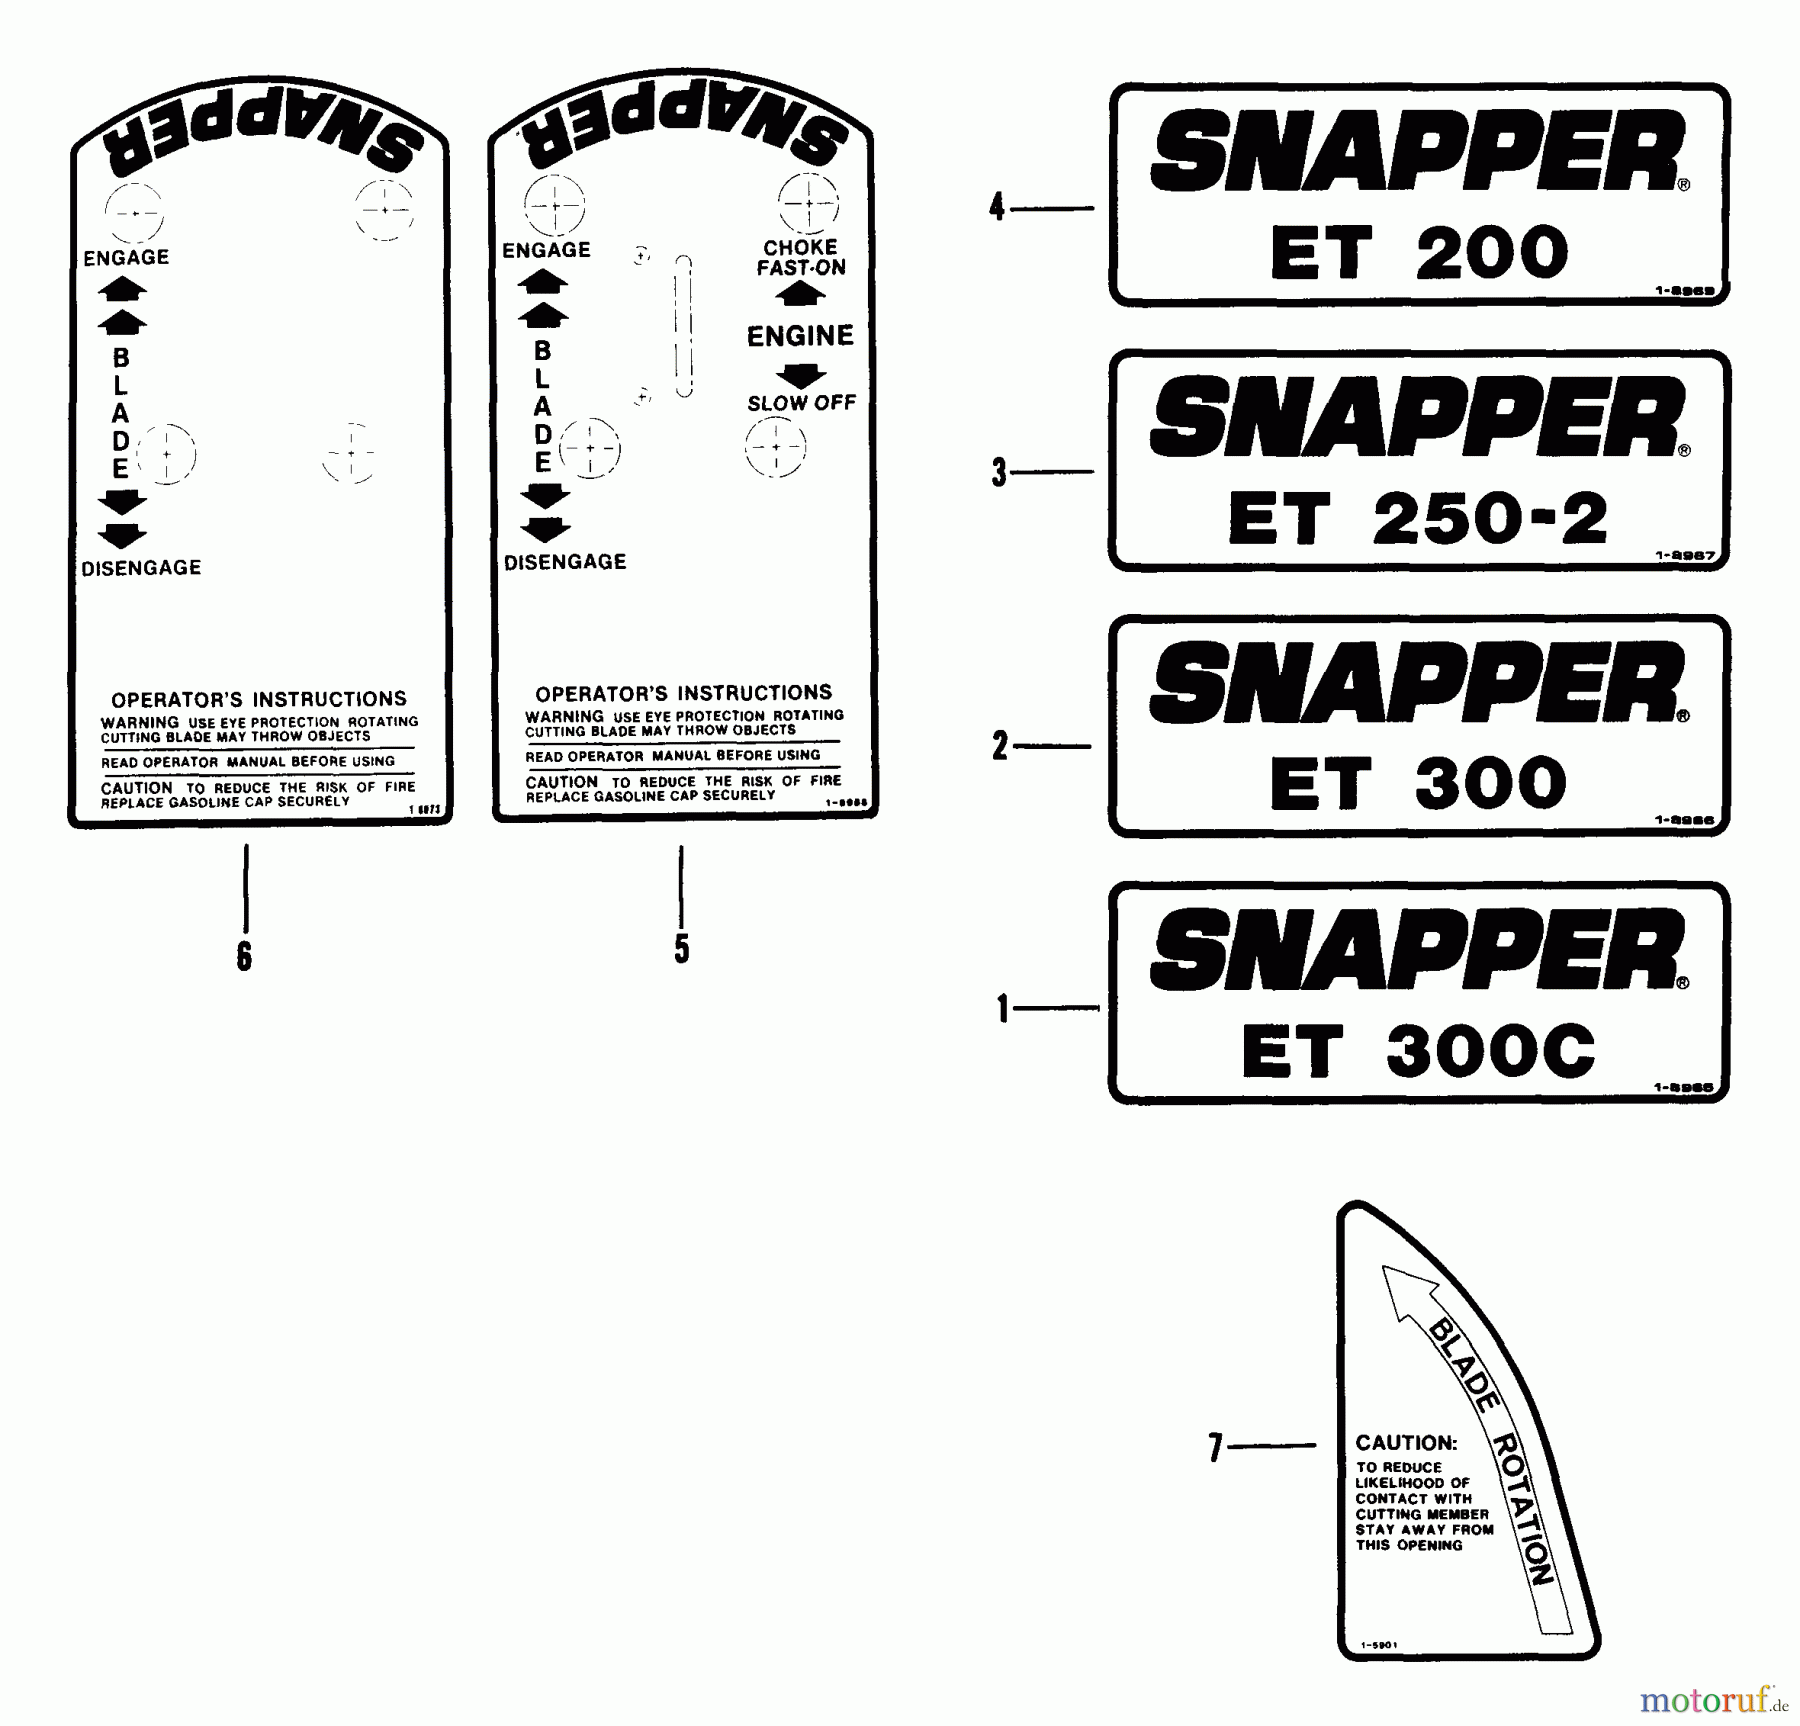  Snapper Kantenschneider ET250-2 - Snapper Edger Trimmer, 2.5 HP, 2-Cycle, Series 0 Decals